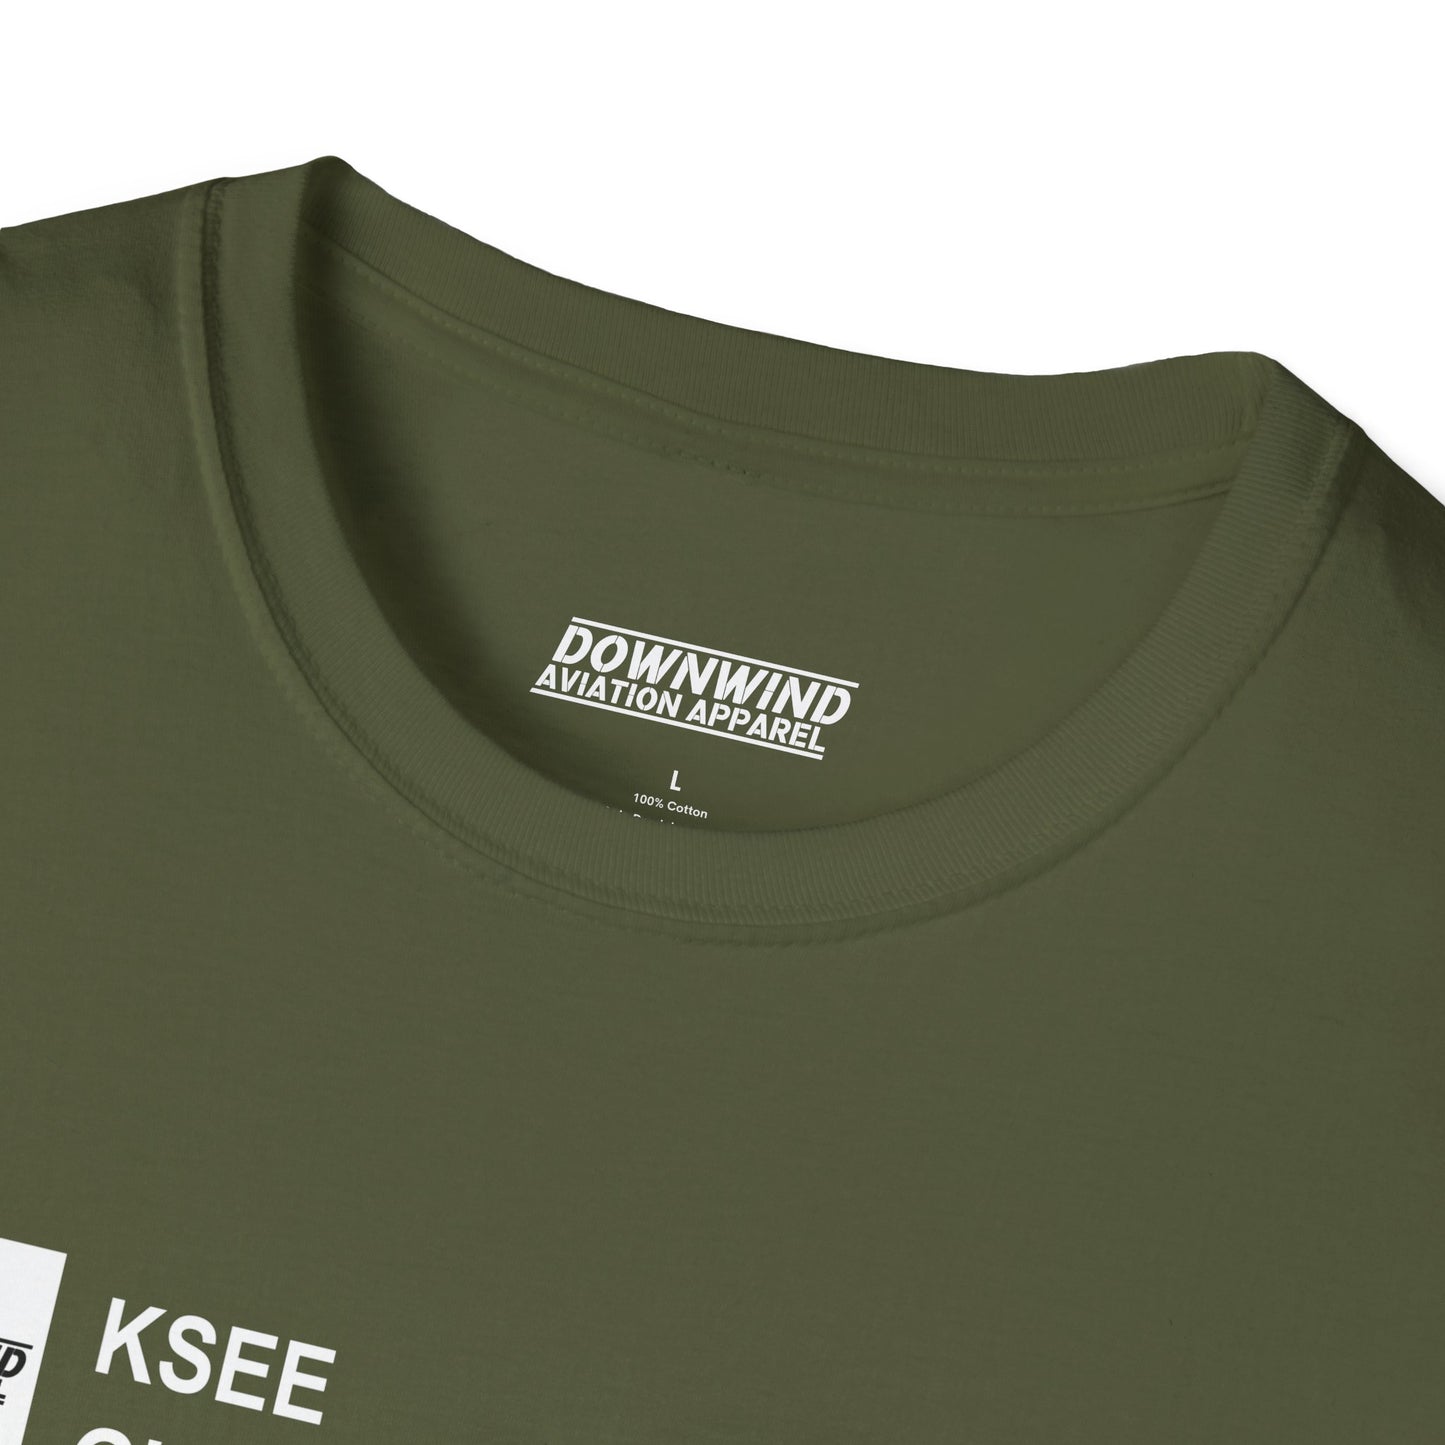 KSEE / Gillespie Field Airport T-Shirt